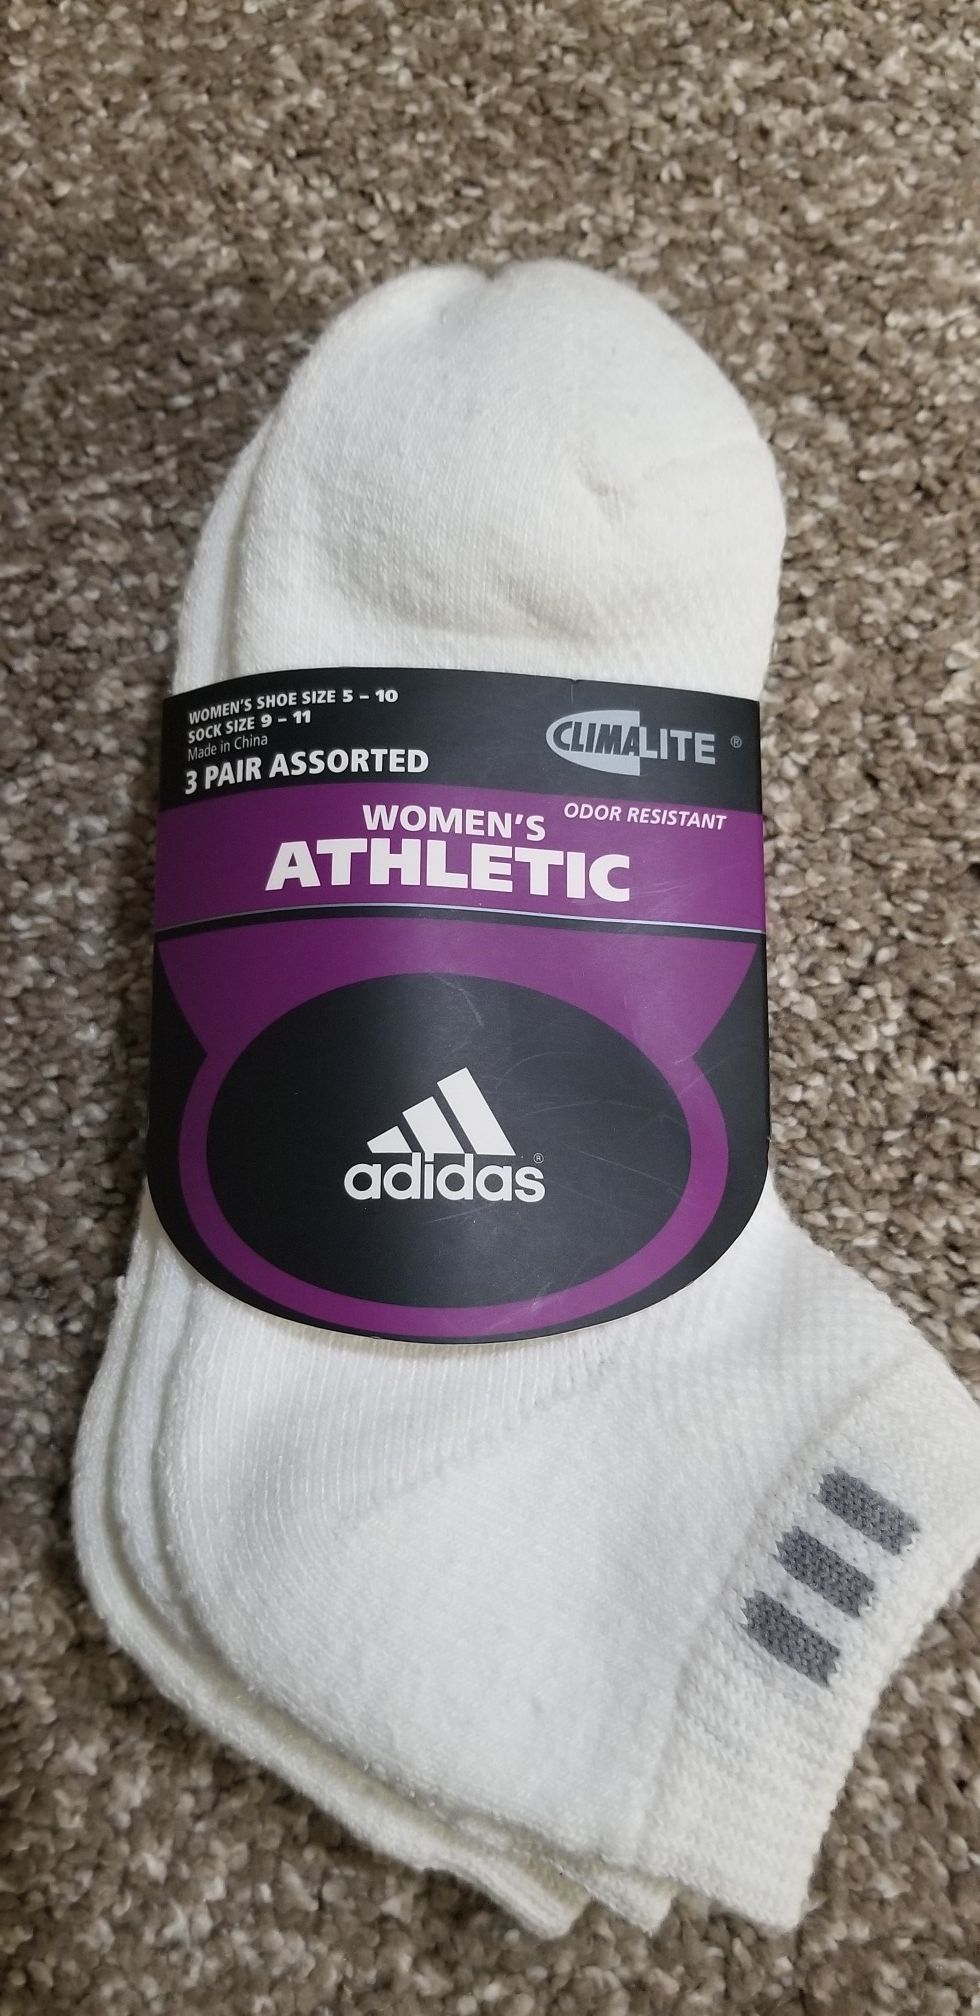 Adidas brand new women's socks.